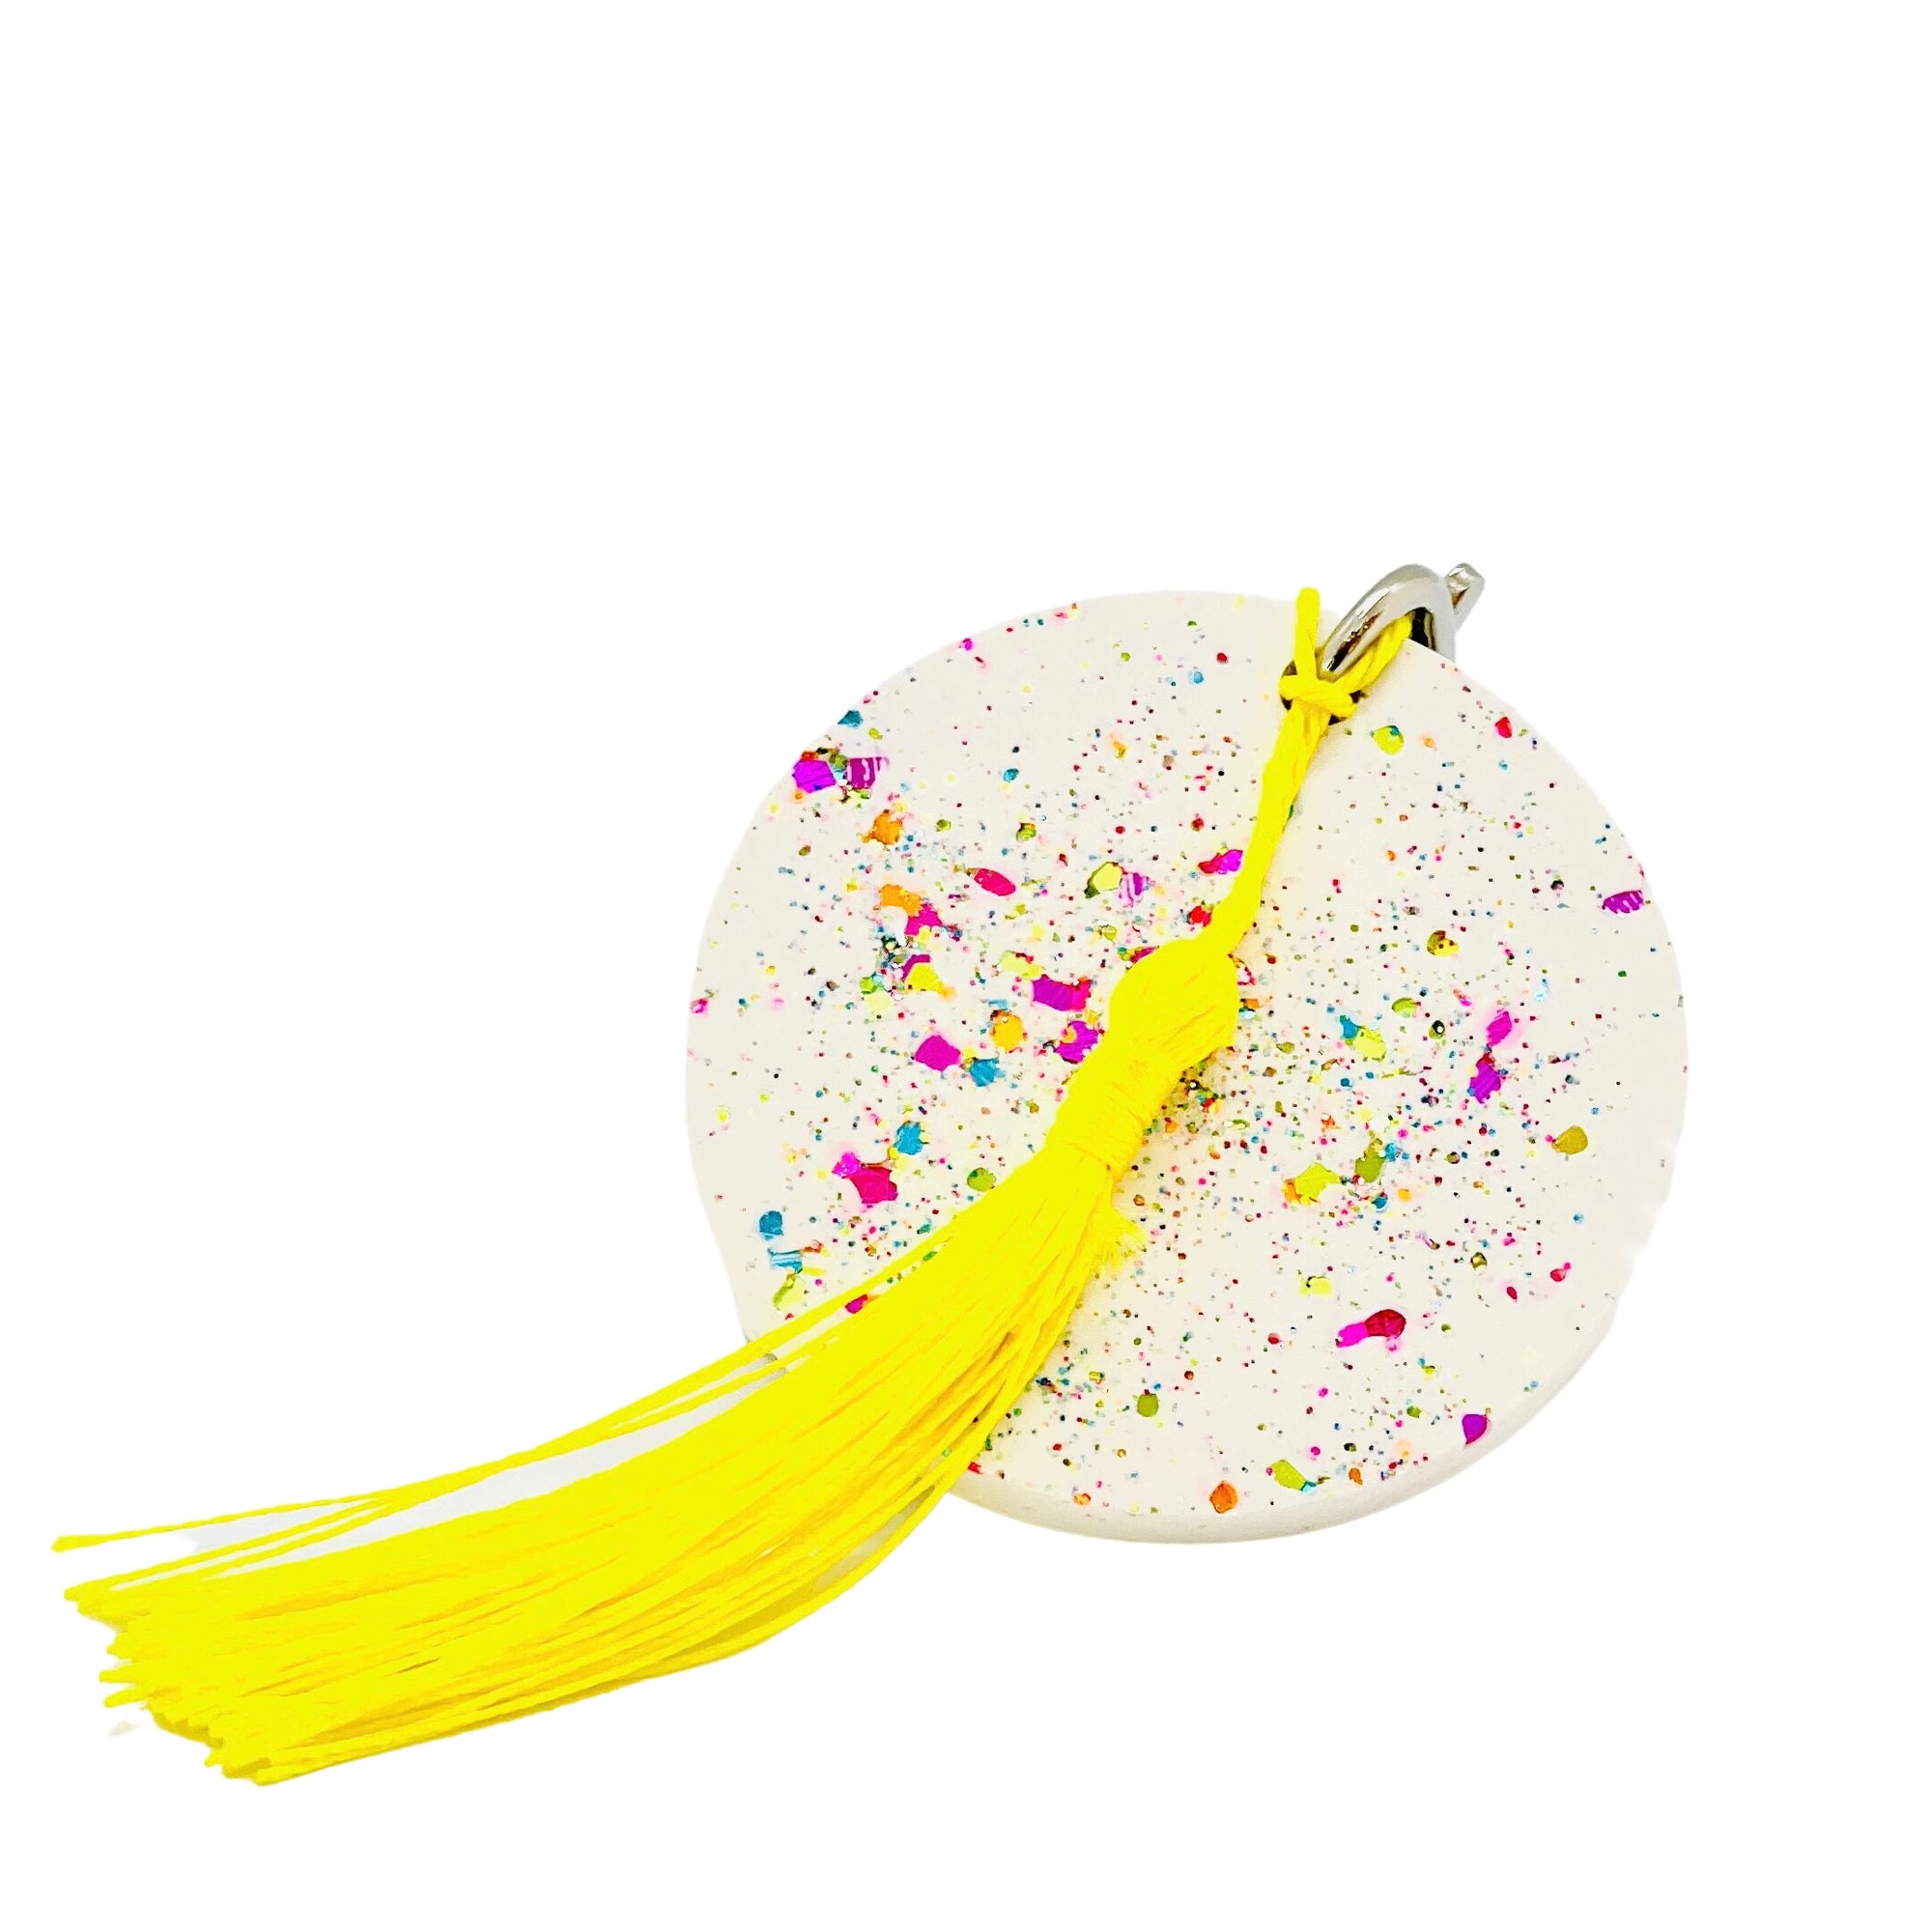 A round  white Jesmonite disc keyring measuring 6cm in diameter sprinkled with rainbow glitter.